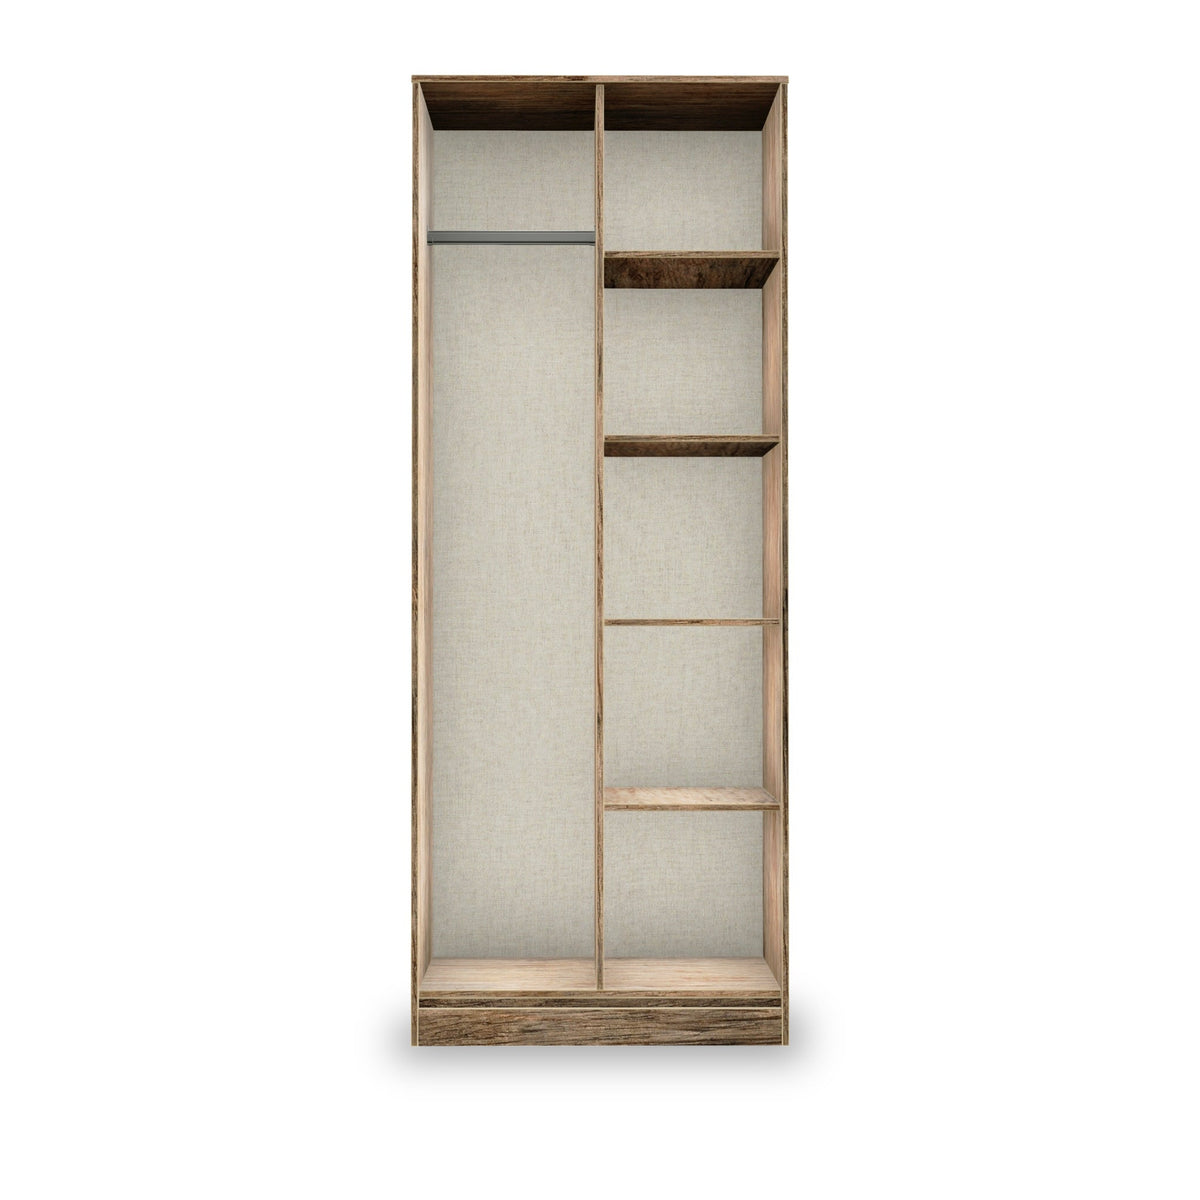 Moreno Rustic Oak Open Shelf Storage Unit from Roseland furniture